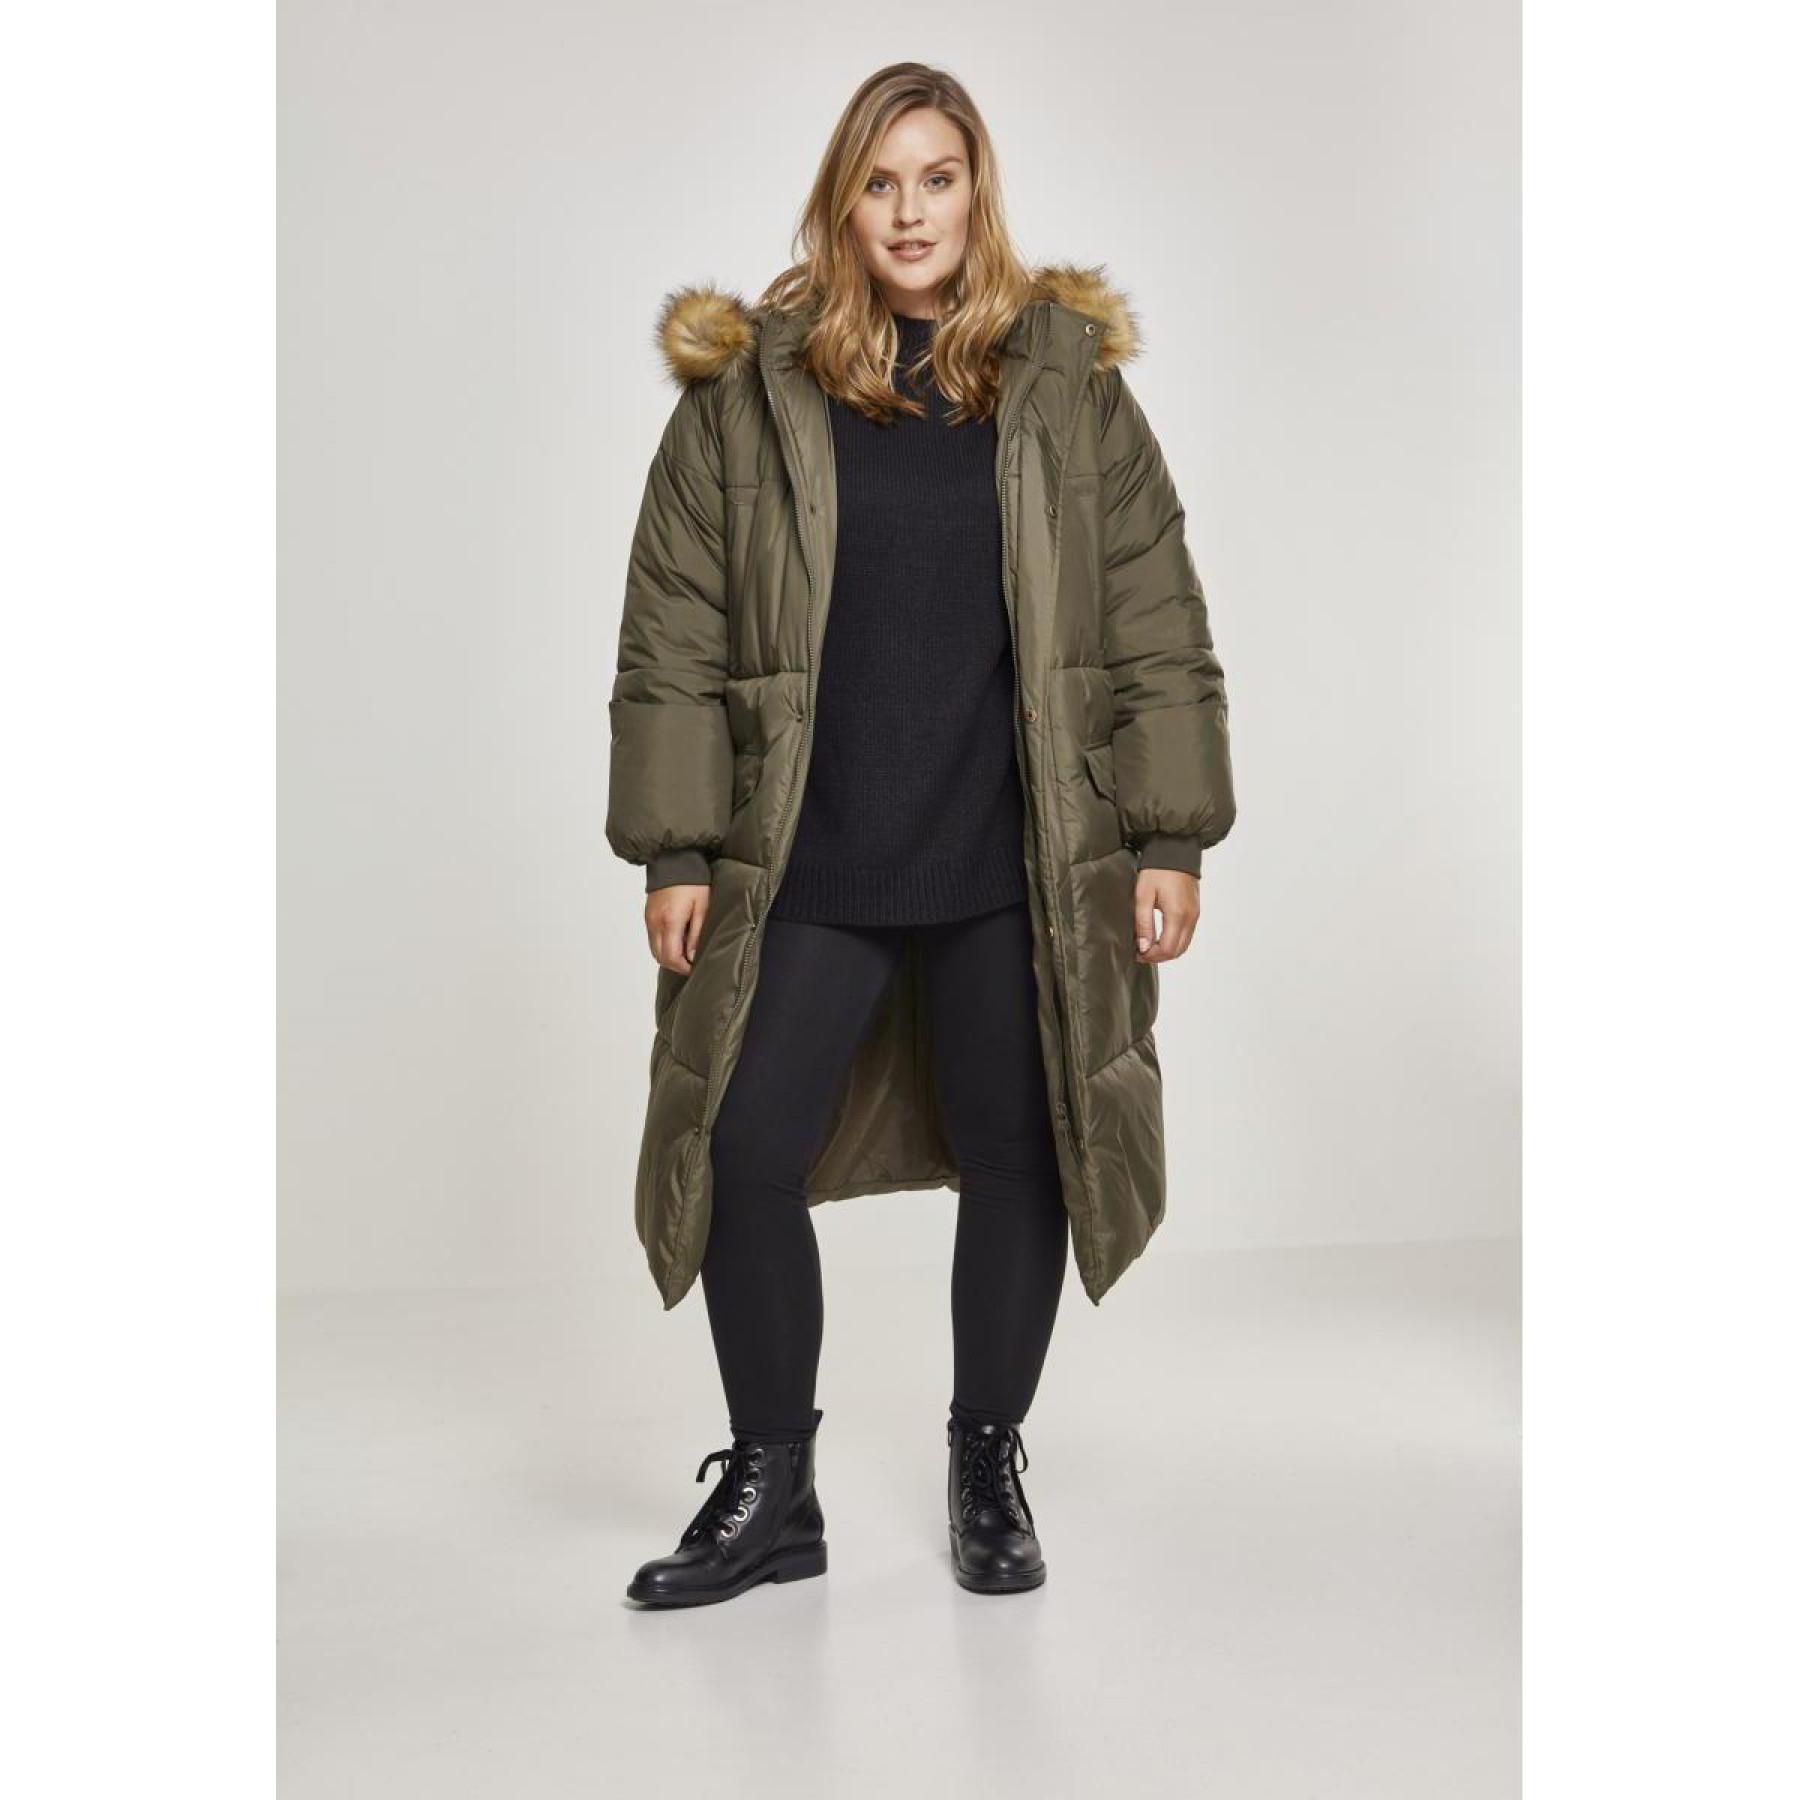 Women\'s Urban Classic Coats and - parka coat Jackets - - Oversize Lifestyle Woman